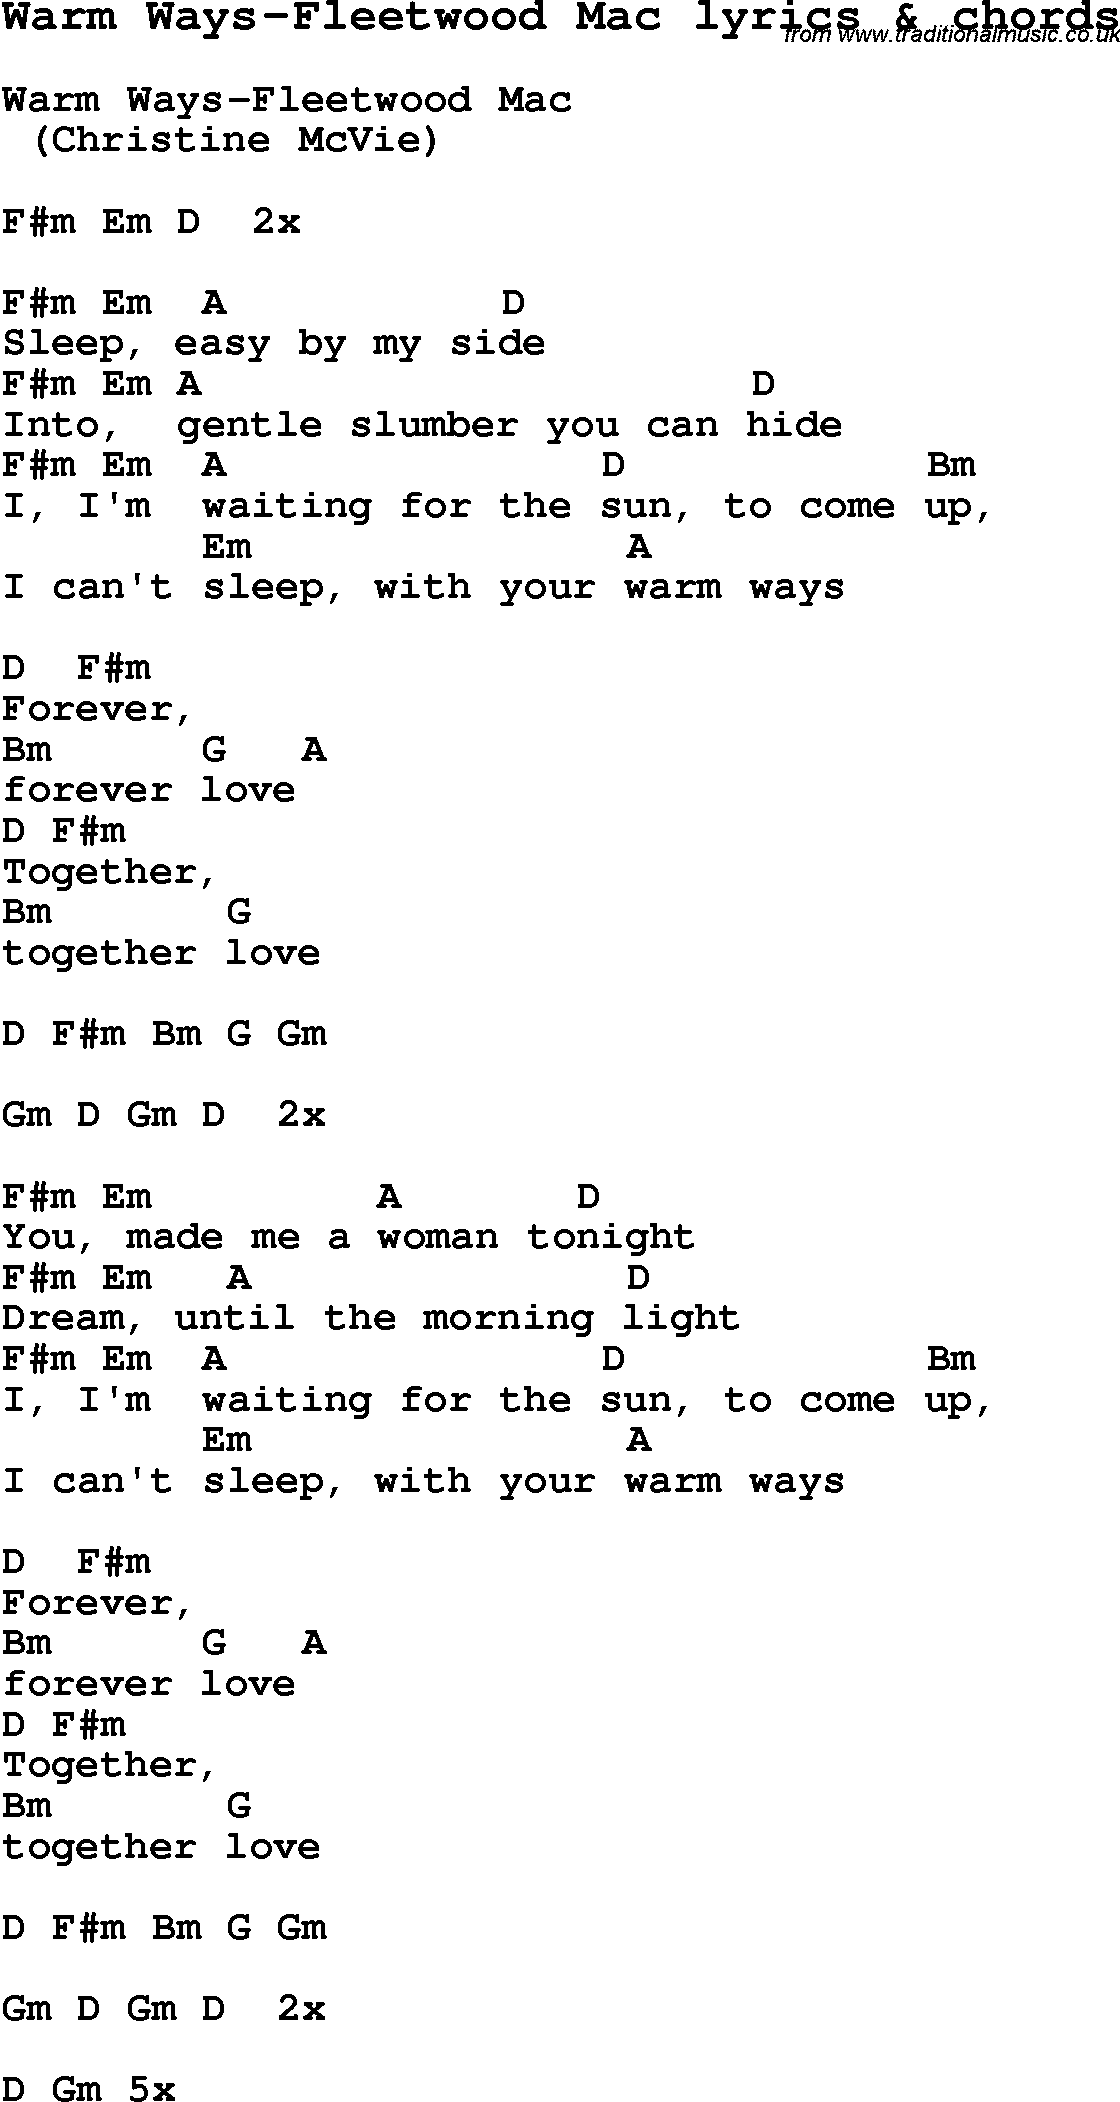 Love Song Lyrics for: Warm Ways-Fleetwood Mac with chords for Ukulele, Guitar Banjo etc.